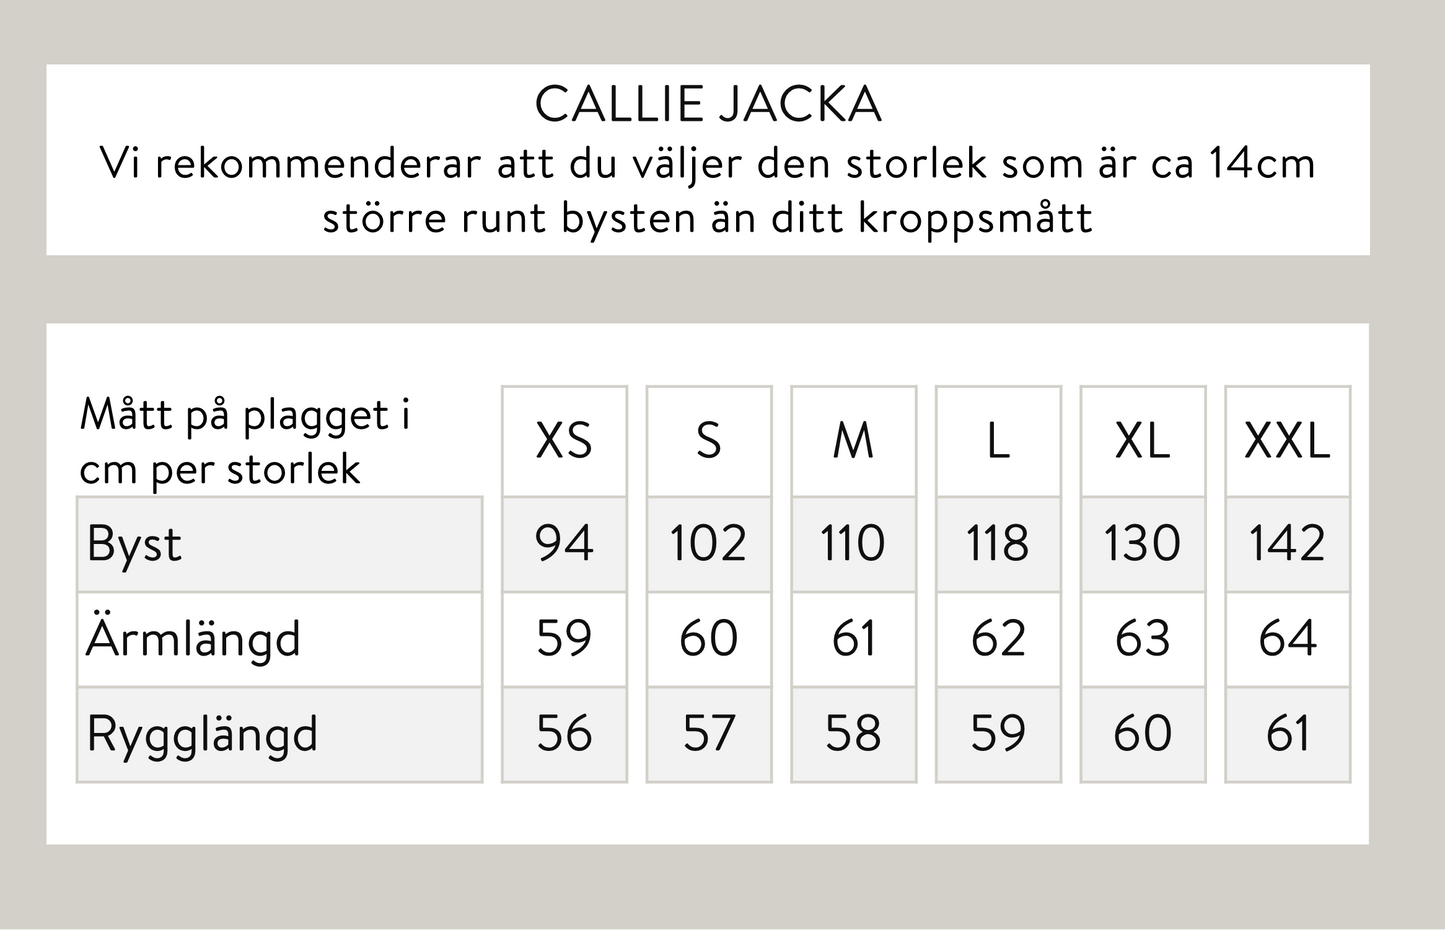 Callie jacka - Svart